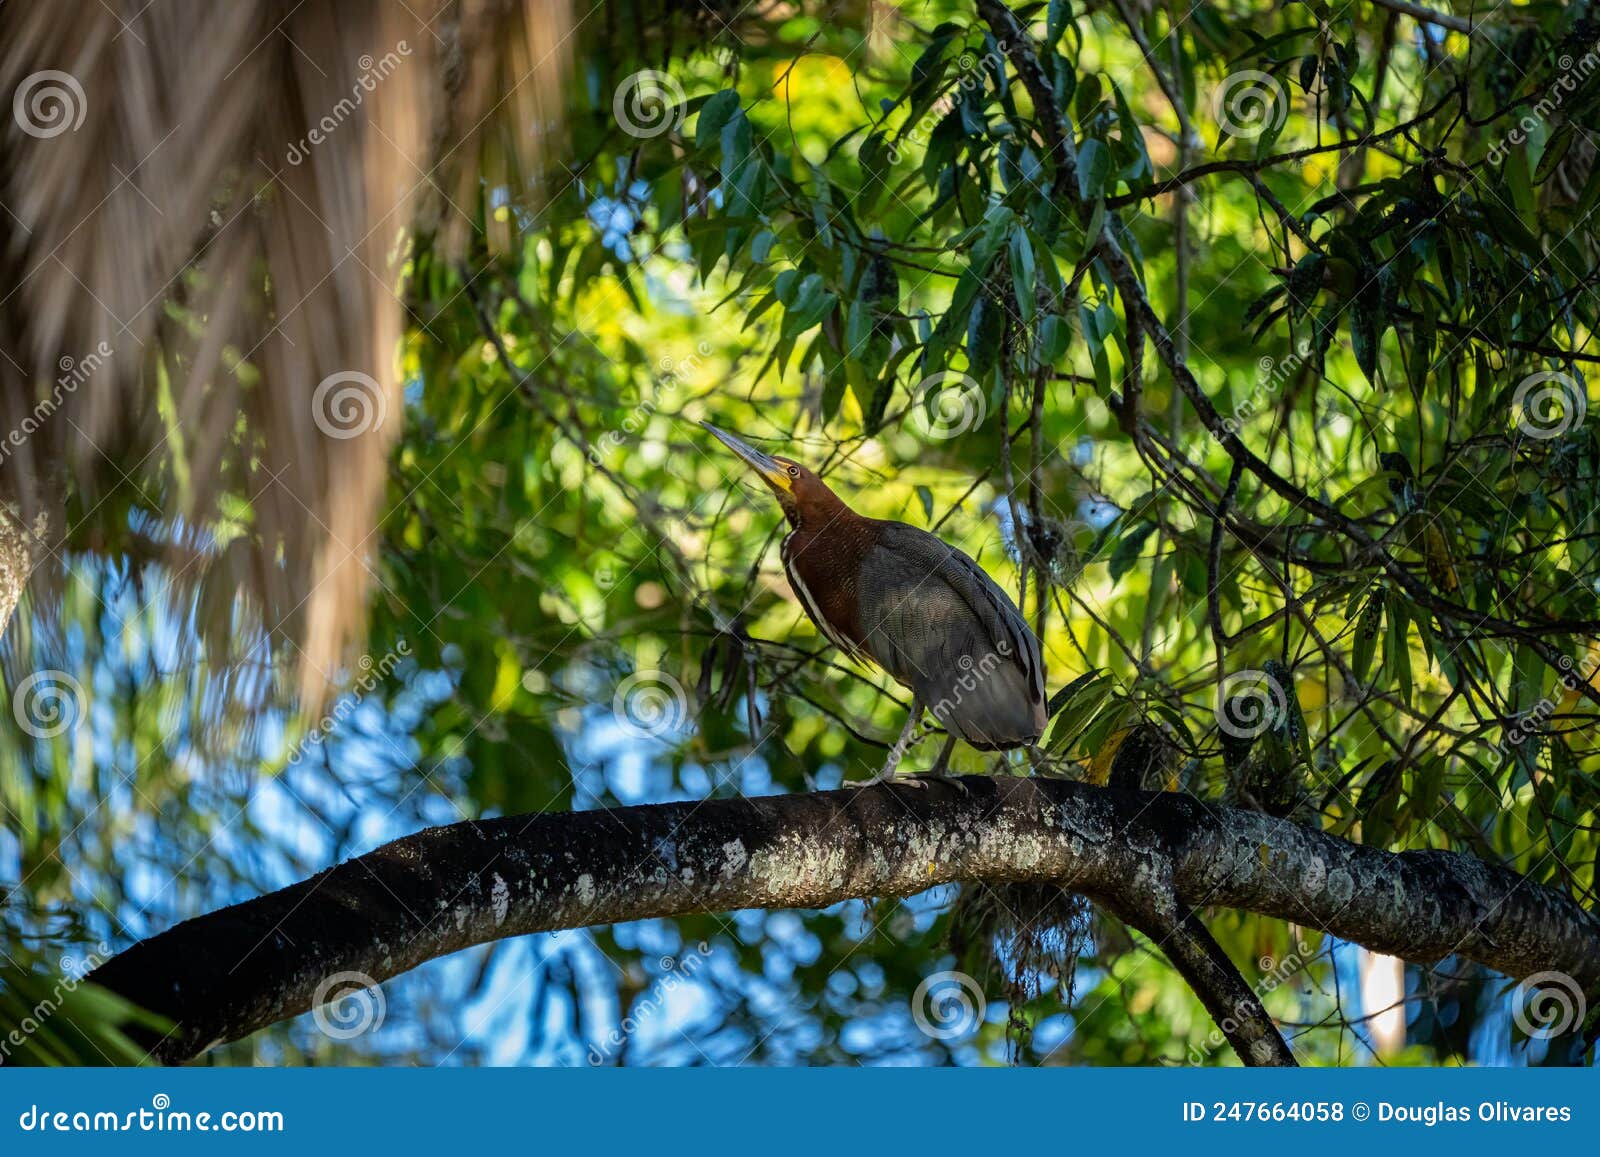 heron or garza tigre colorada resting on a tree branch. ardeidae family